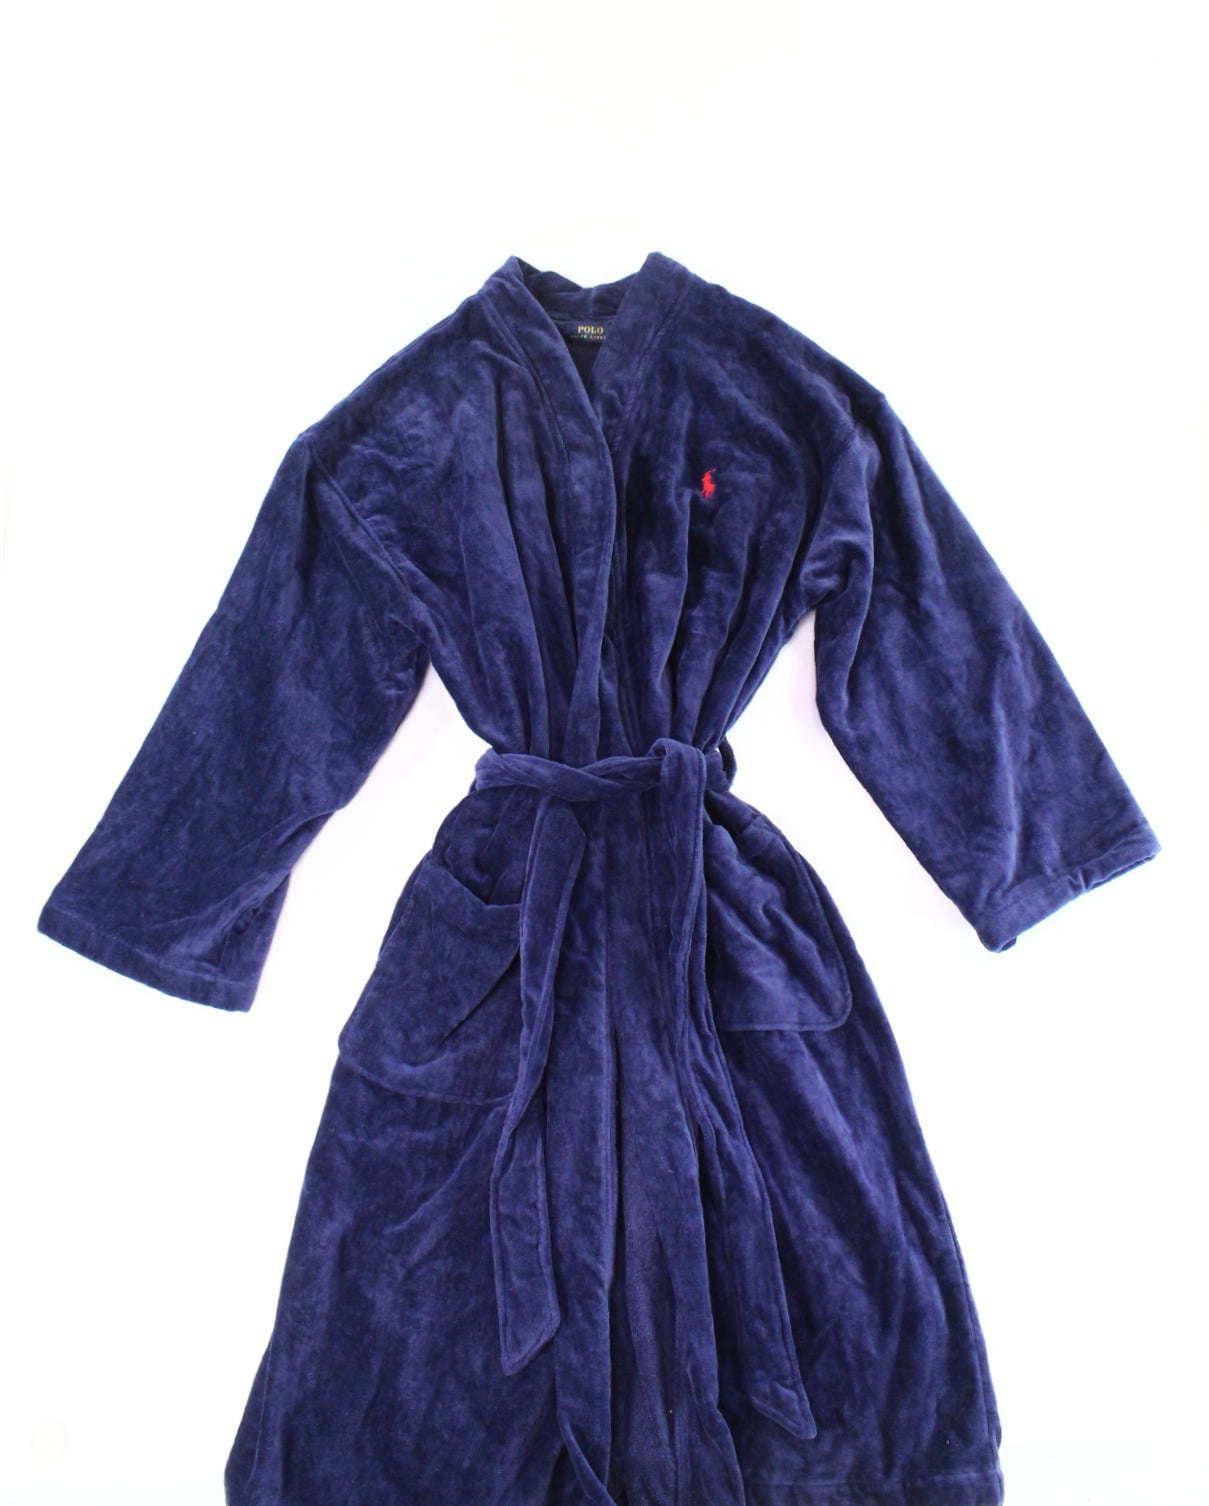 polo ralph lauren men's sleepwear soft cotton kimono velour robe